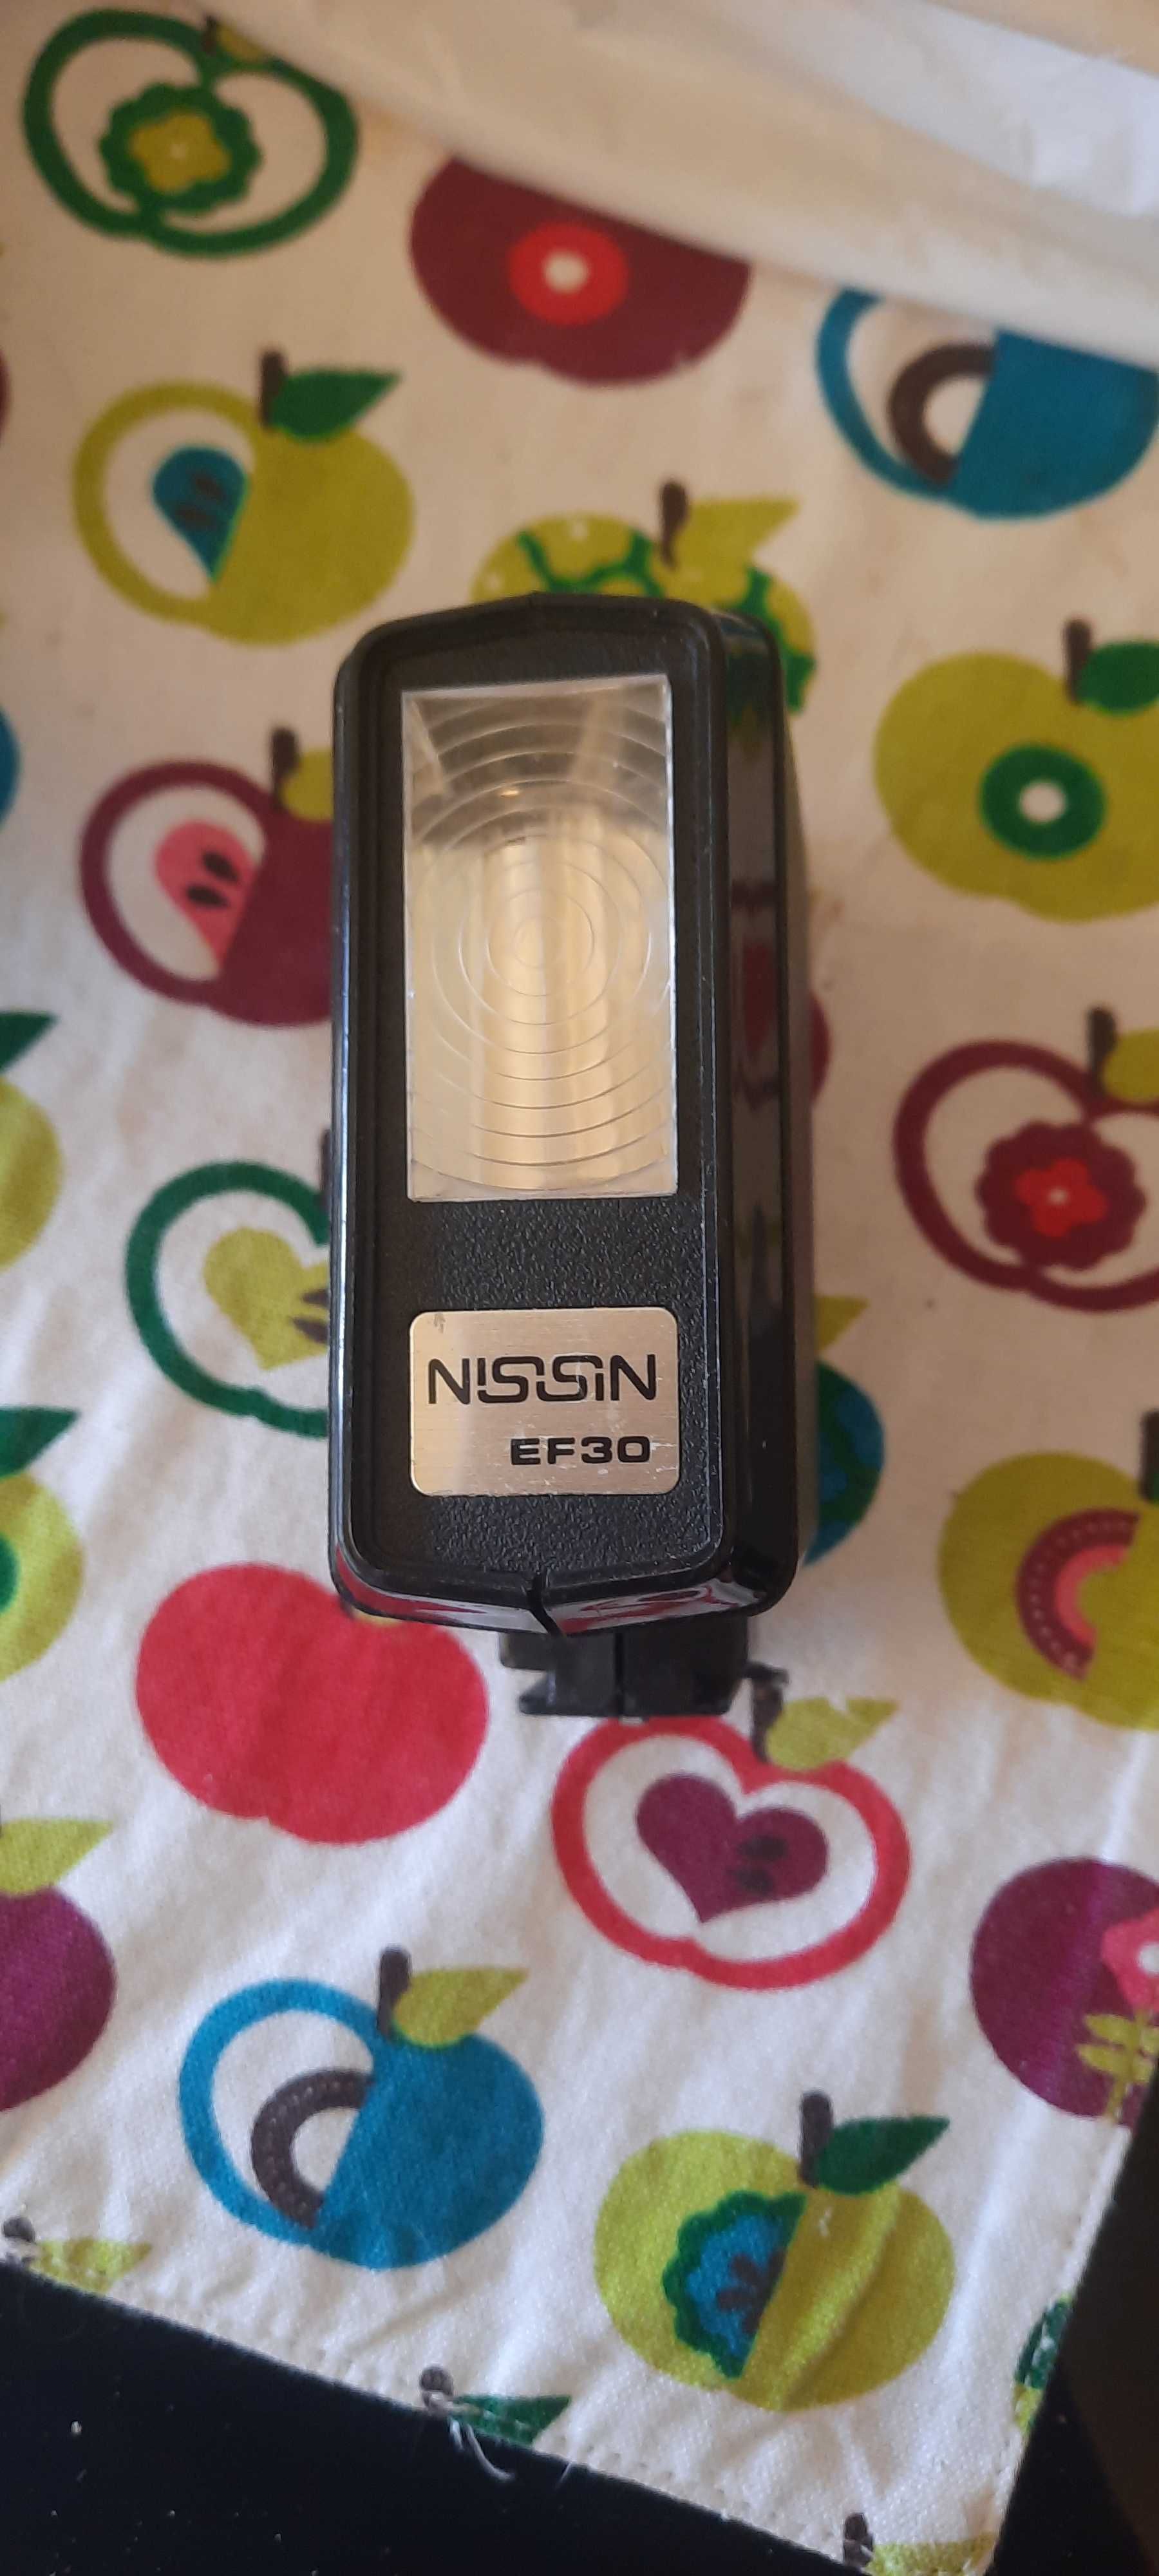 Vendo Flash EF30 NISSIN